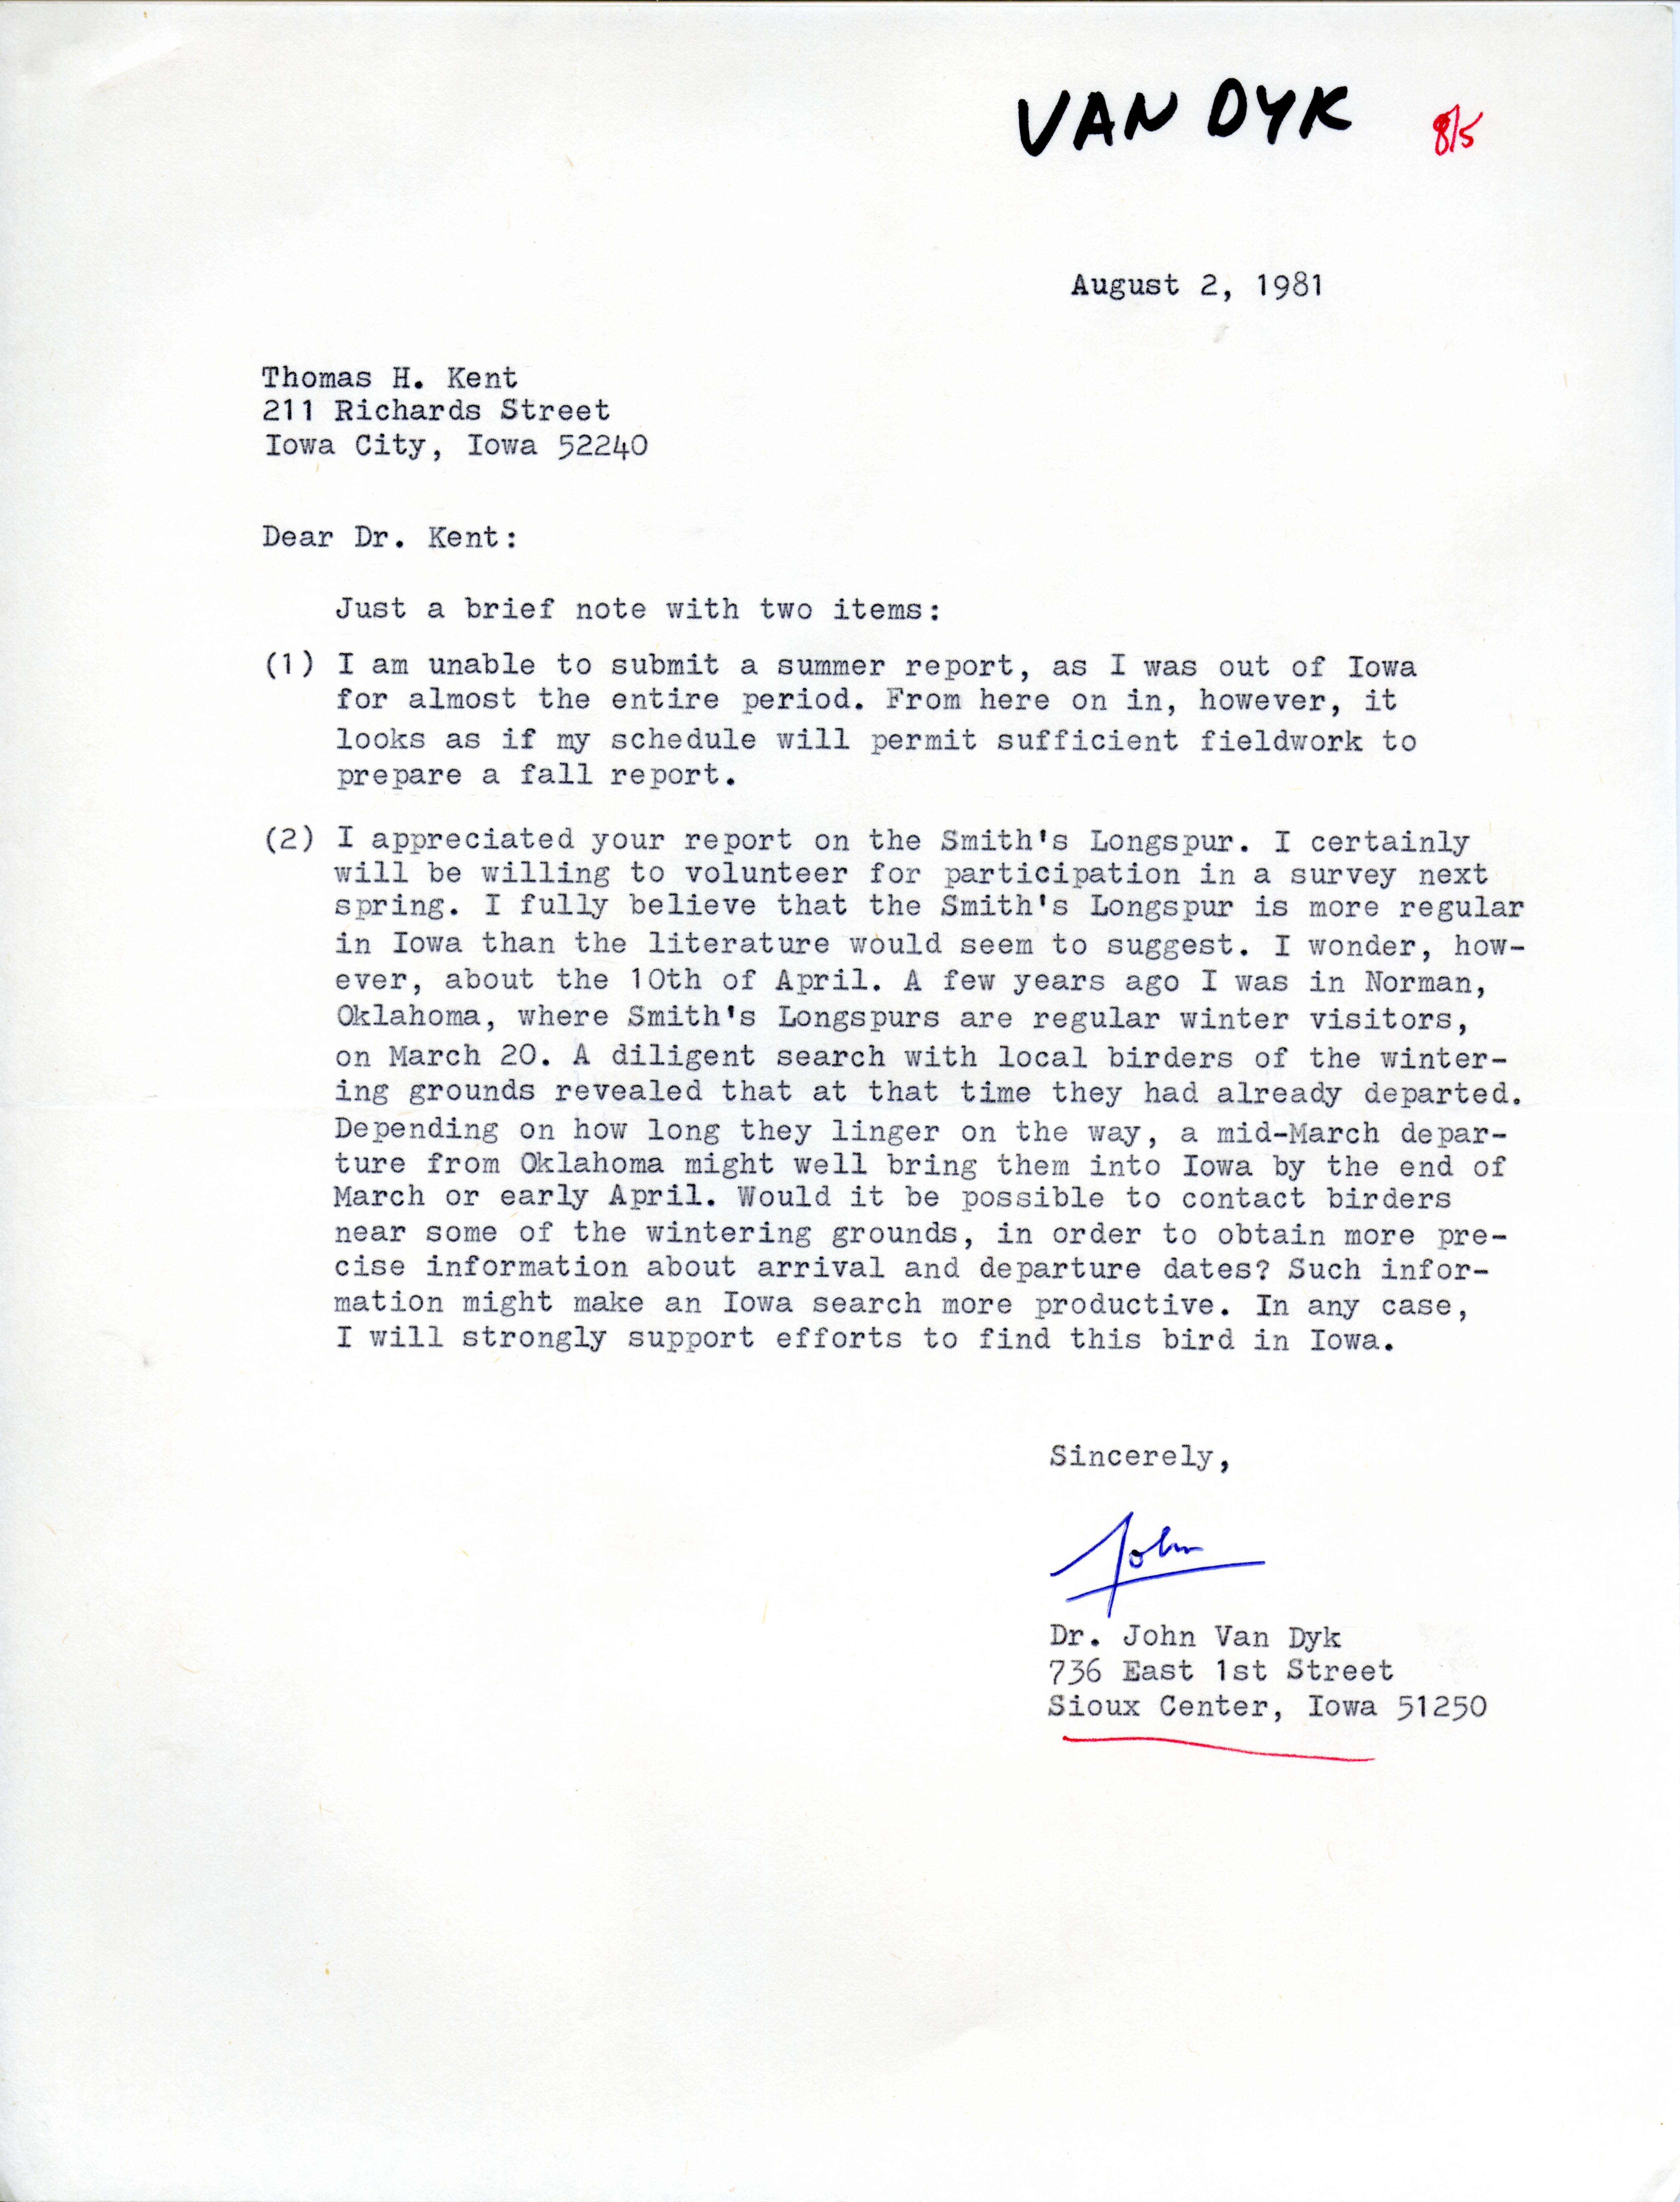 John Van Dyk letter to Thomas H. Kent regarding no summer bird sightings, August 2, 1981